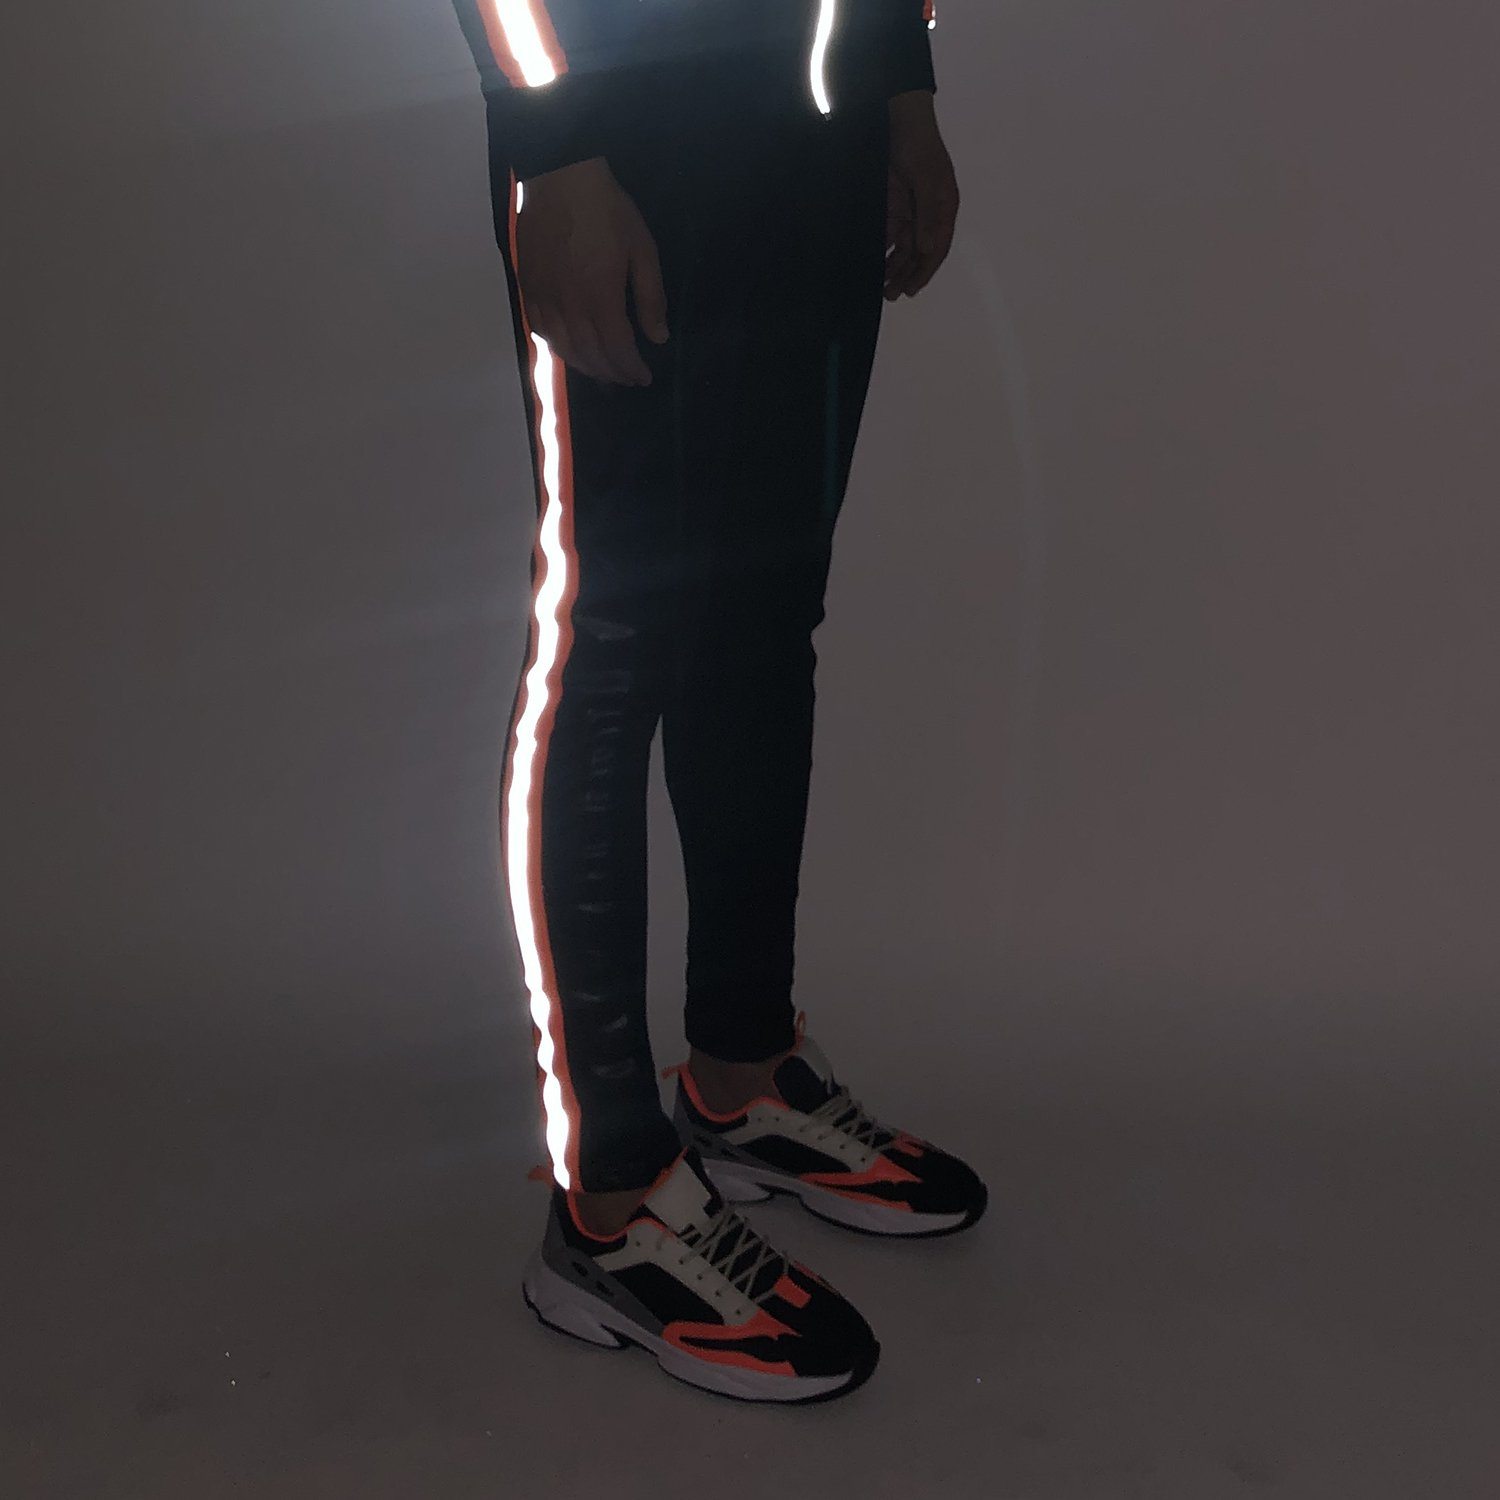 All Black Neon Orange Reflective Joggers  Buy Men Trackpants  Fugazee   FUGAZEE